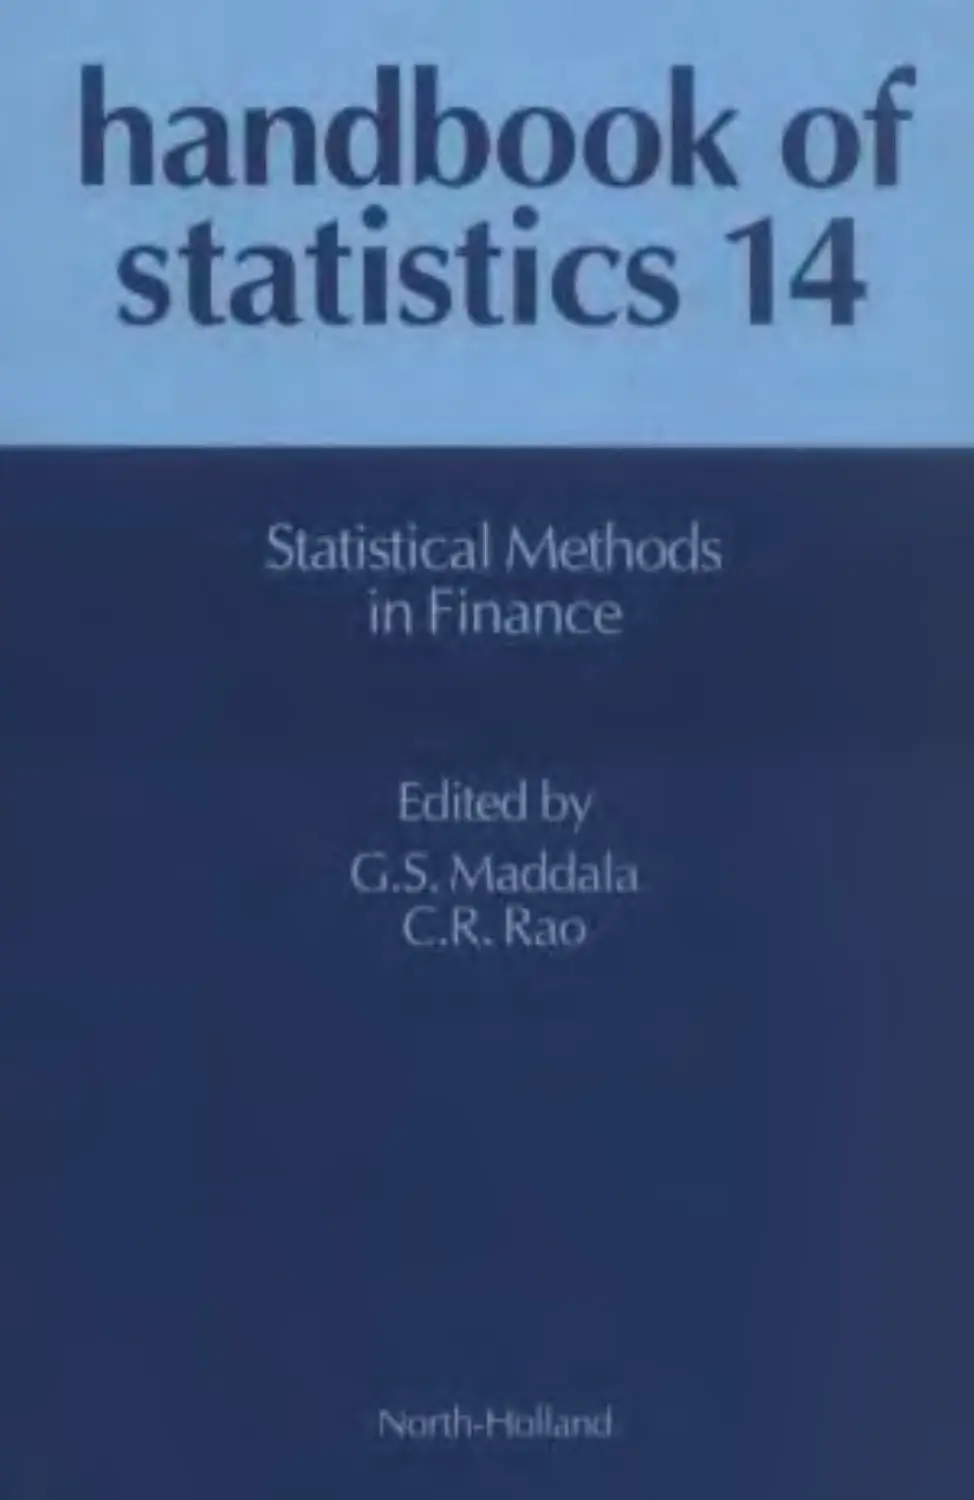 Handbook of Statistics 14: Statistical Methods in Finance